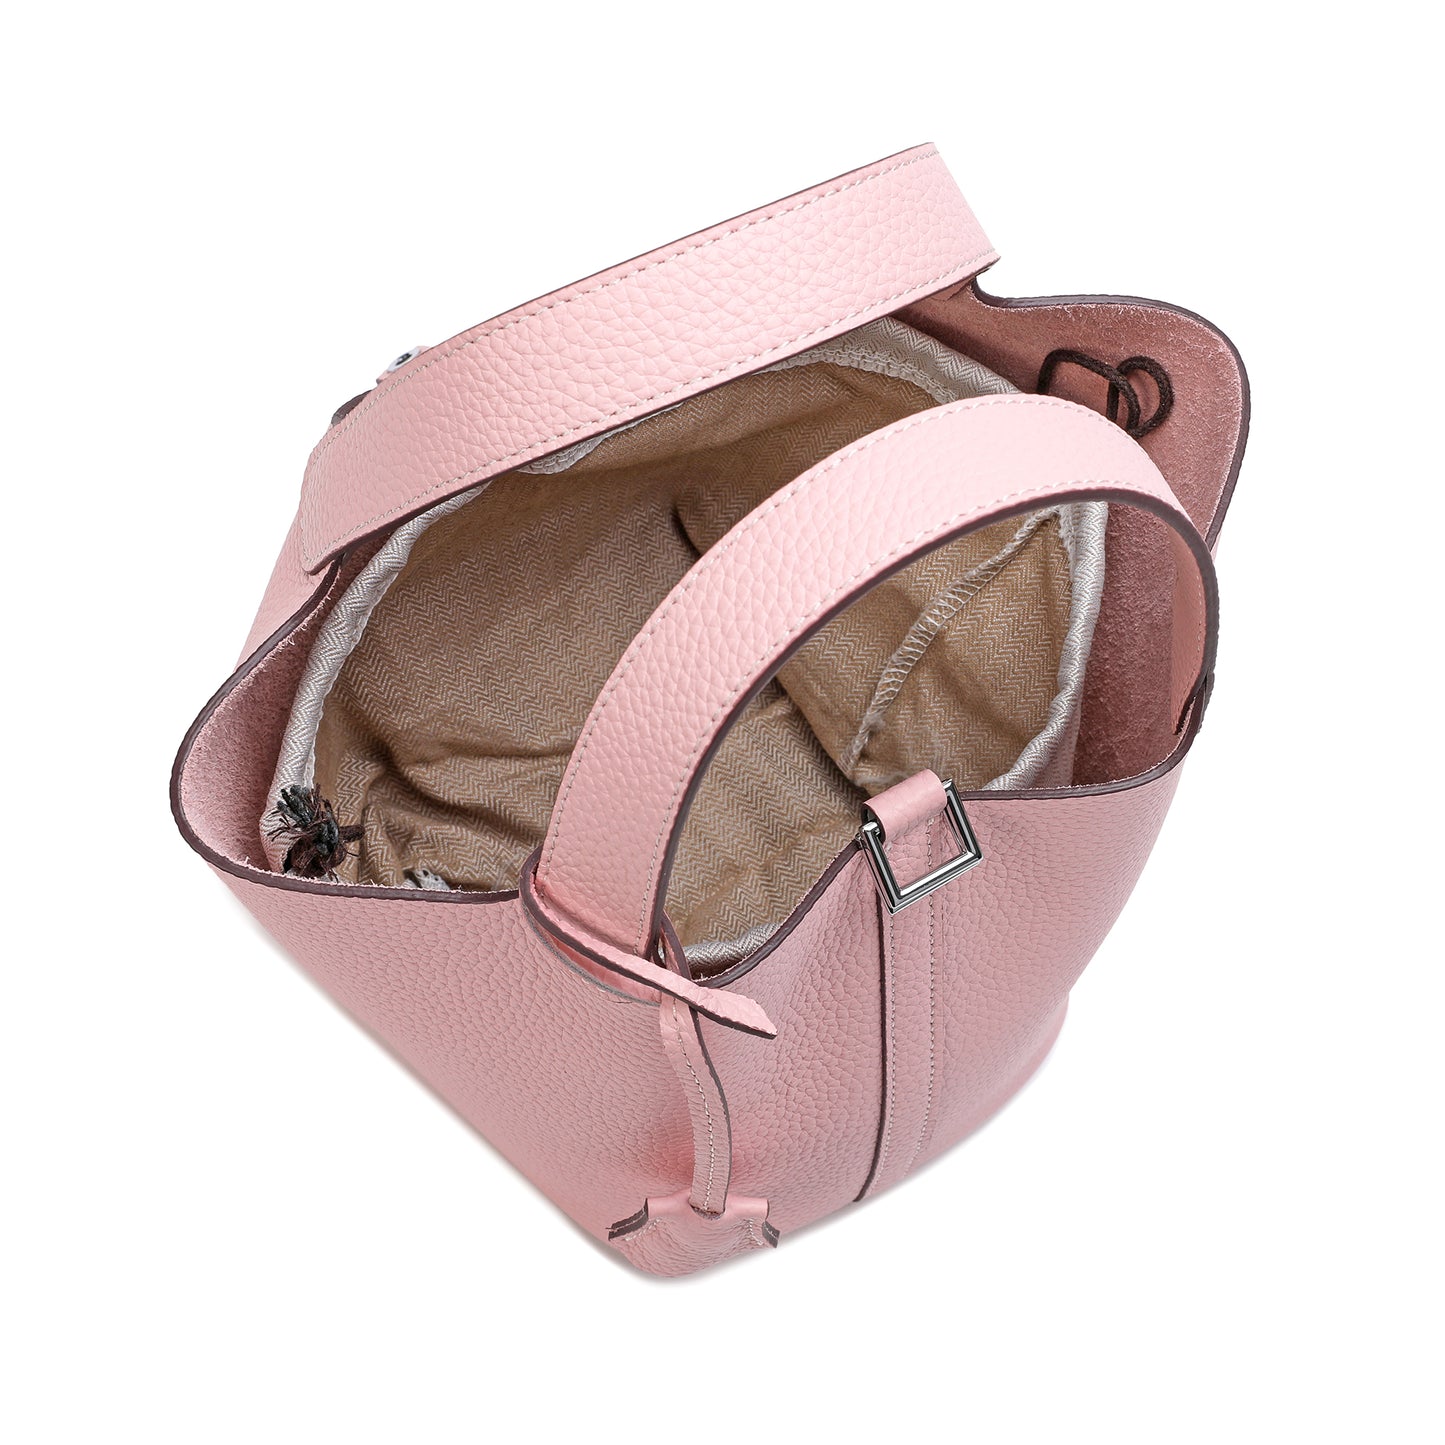 Tiffany & Fred Full-grain Leather Top-Handle Bag